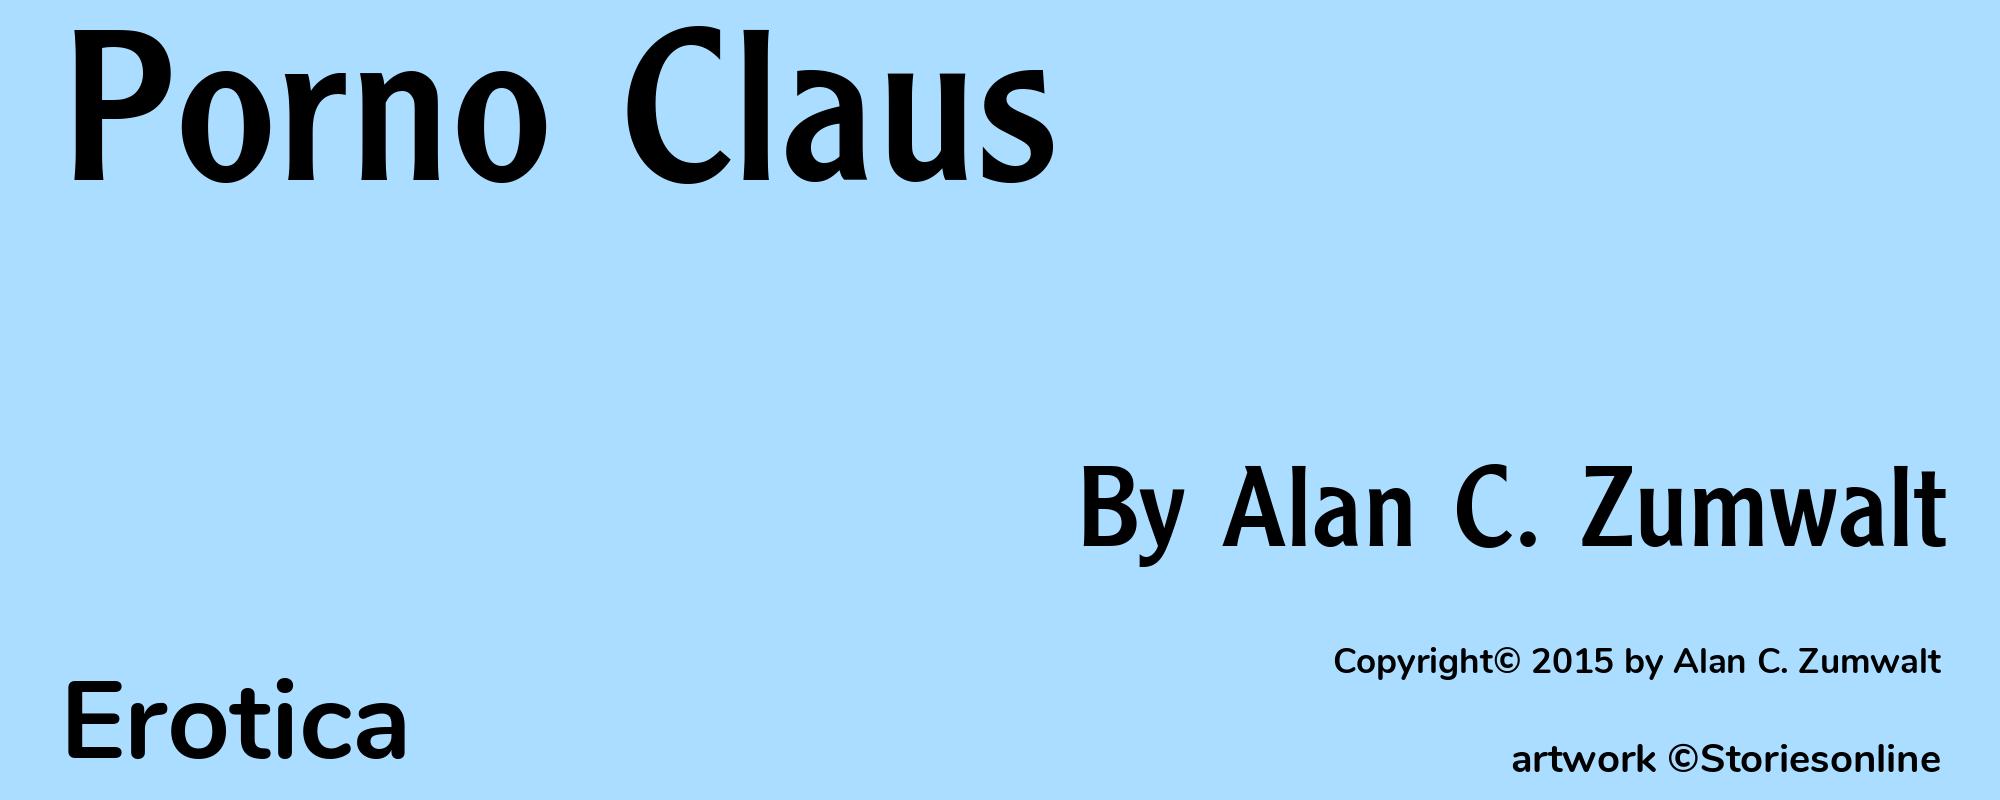 Porno Claus - Cover